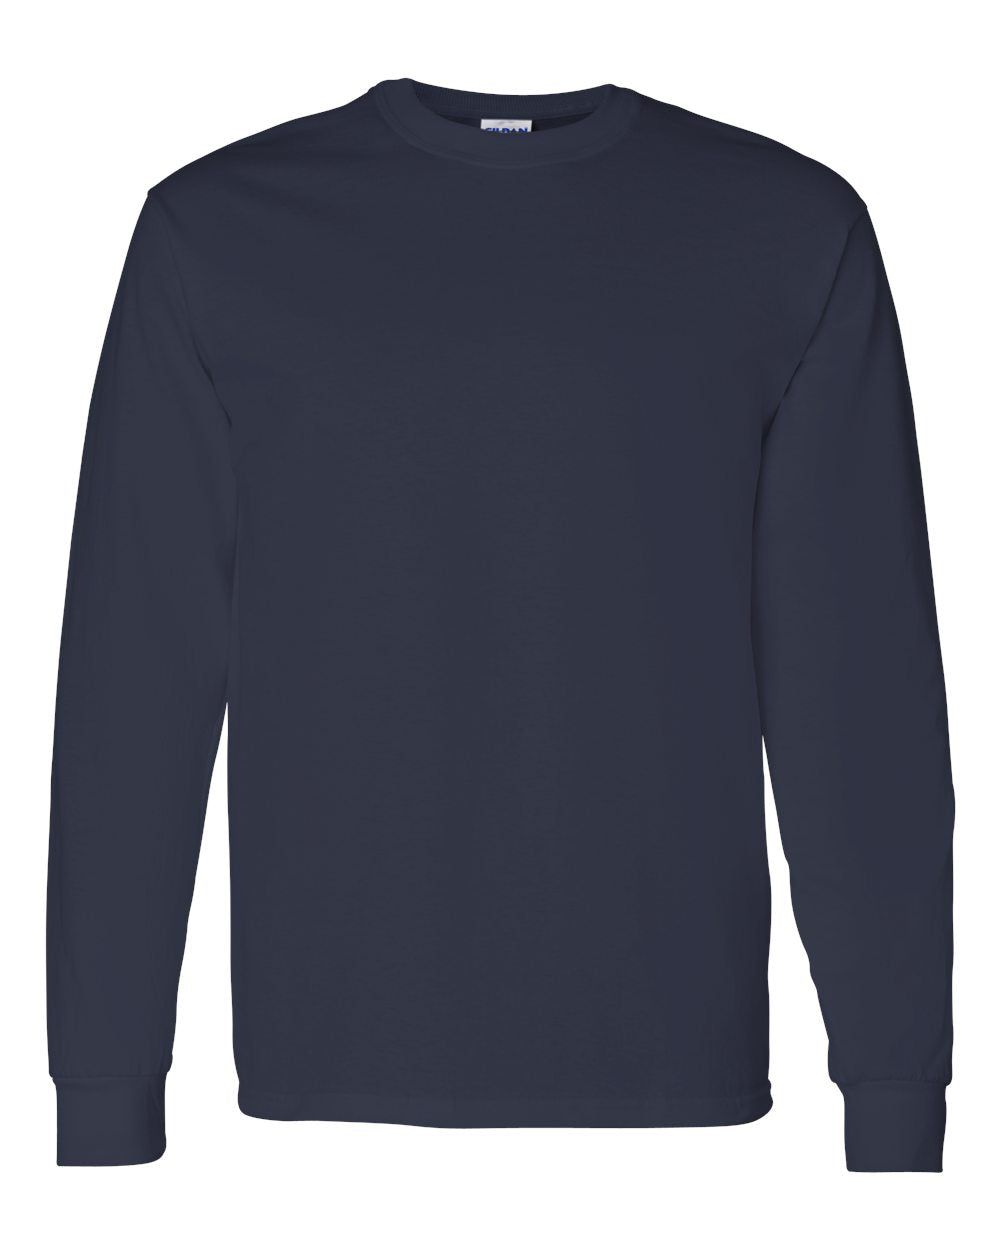 Pretreated Gildan 5400 Heavy Cotton Long Sleeve T-Shirt - Navy